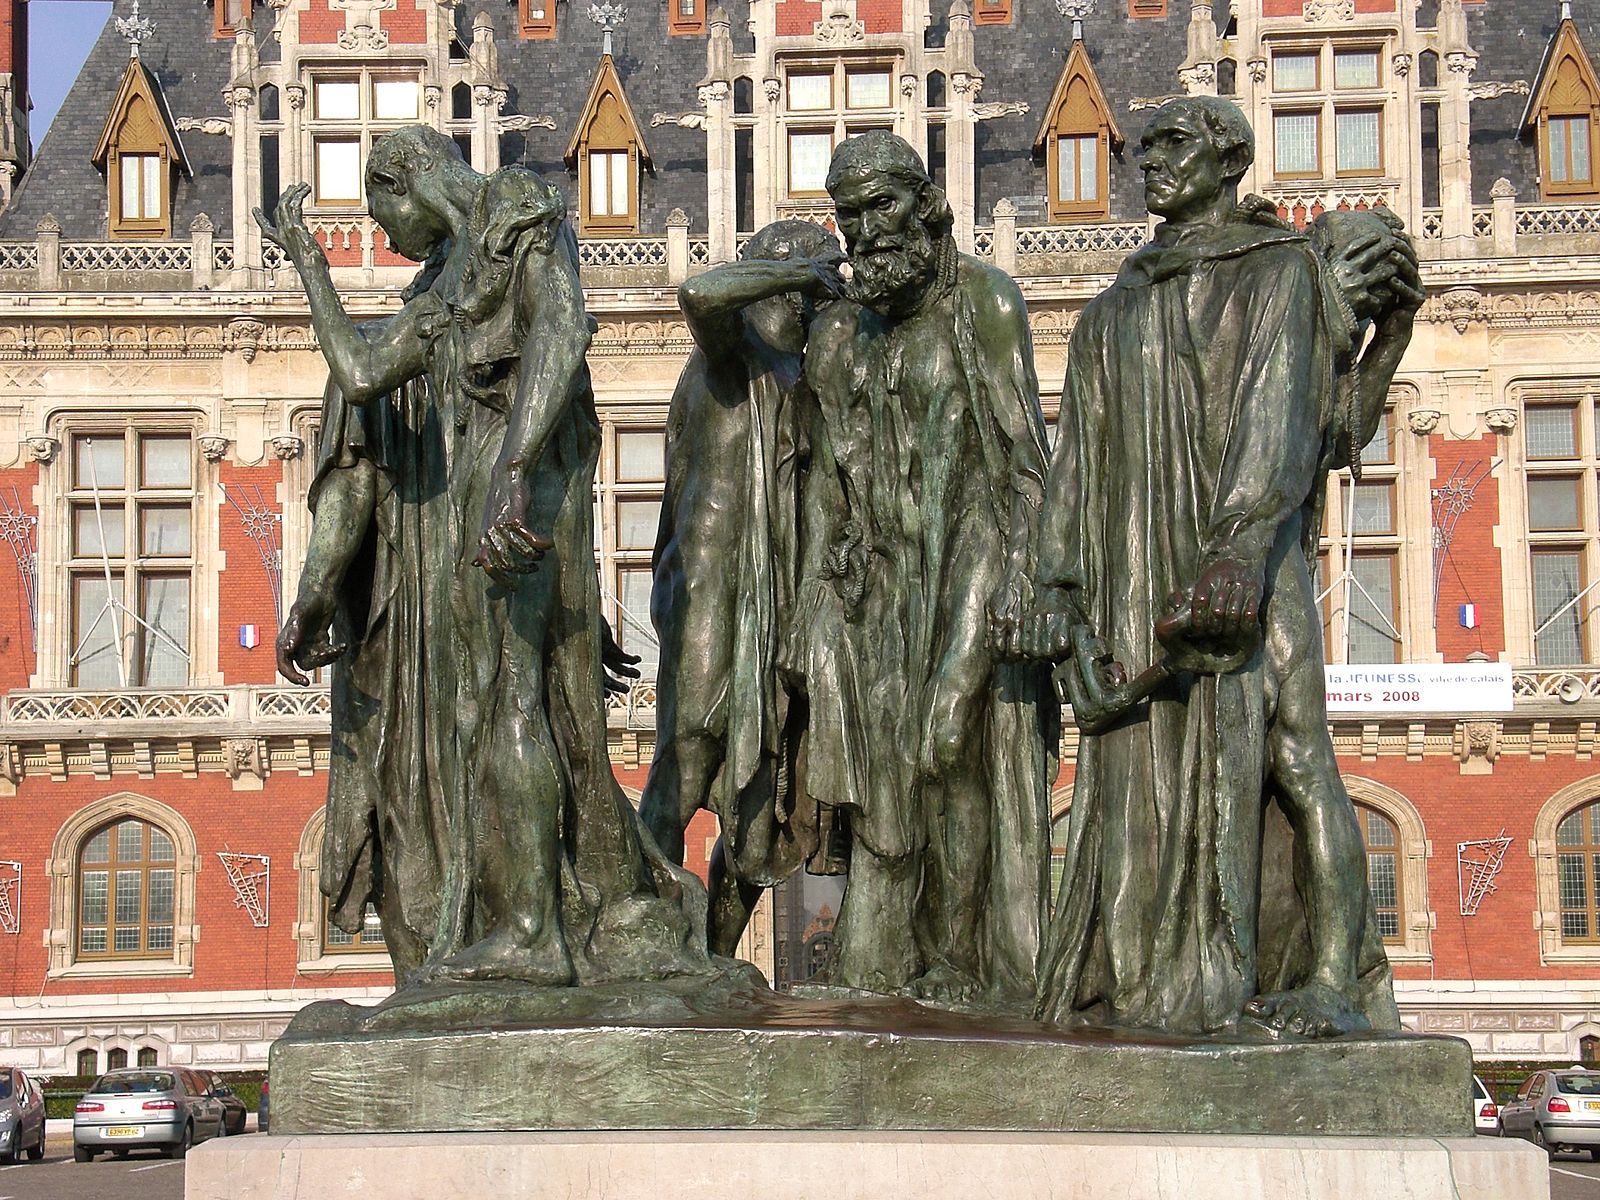 Auguste Rodin, The Burghers of Calais, 1884-1895, in front of the Hôtel de Ville, Calais, France.